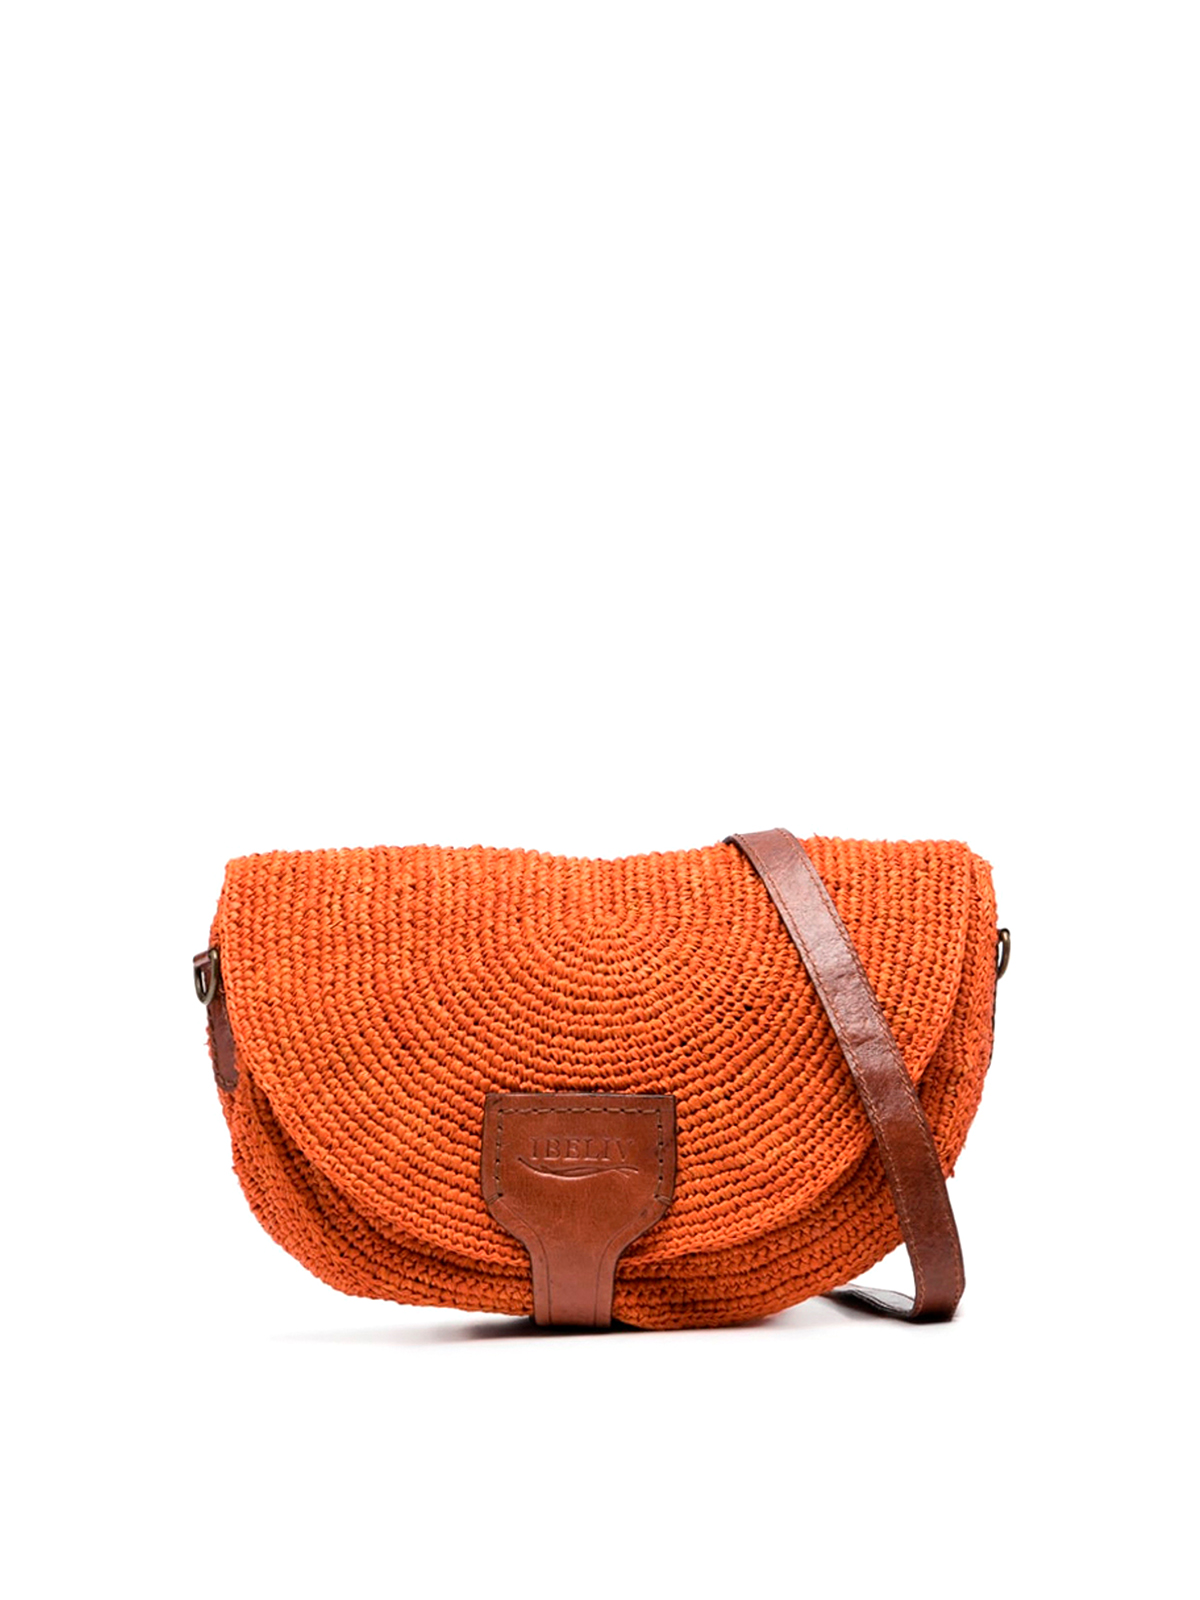 Ibeliv `tiako`bag In Orange